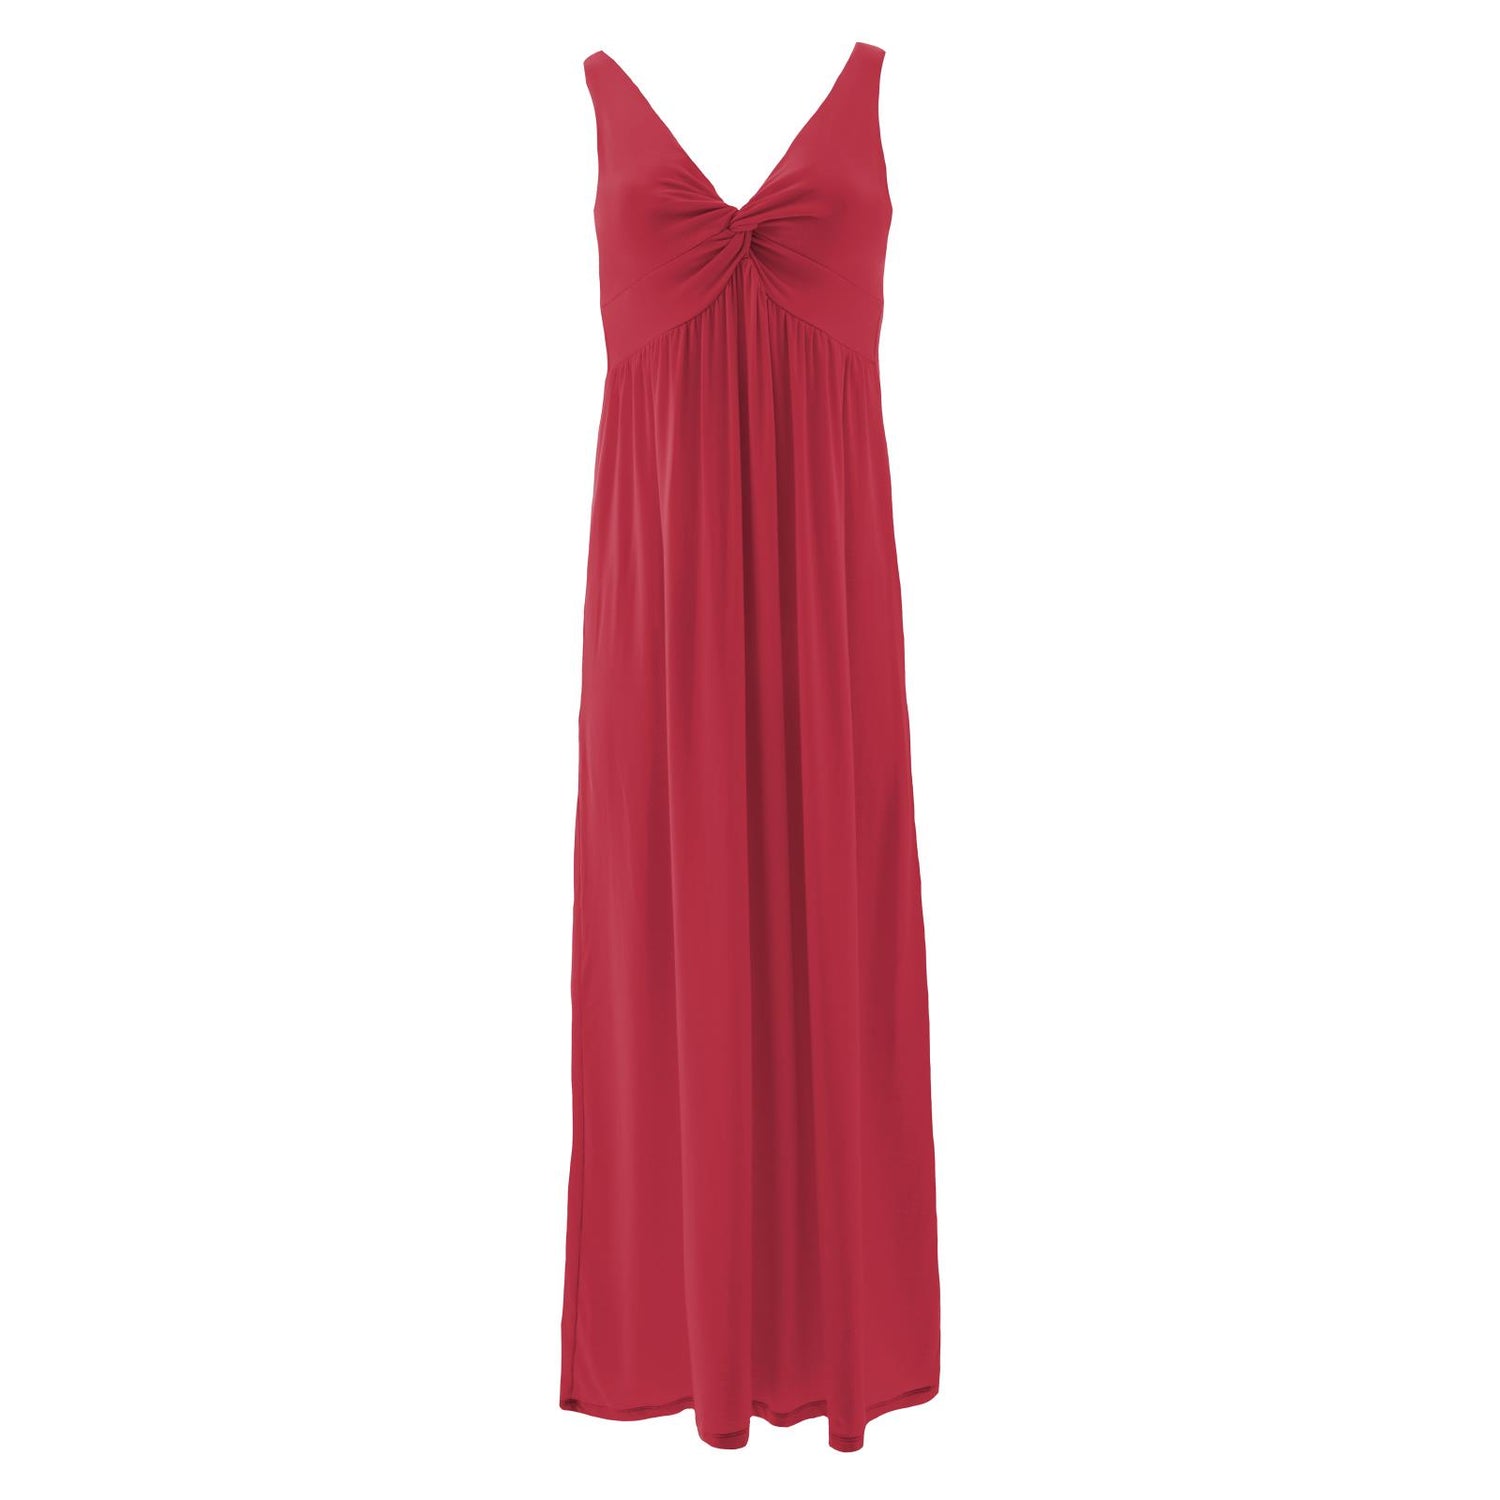 Women's Simple Twist Nightgown in Ribbon Red